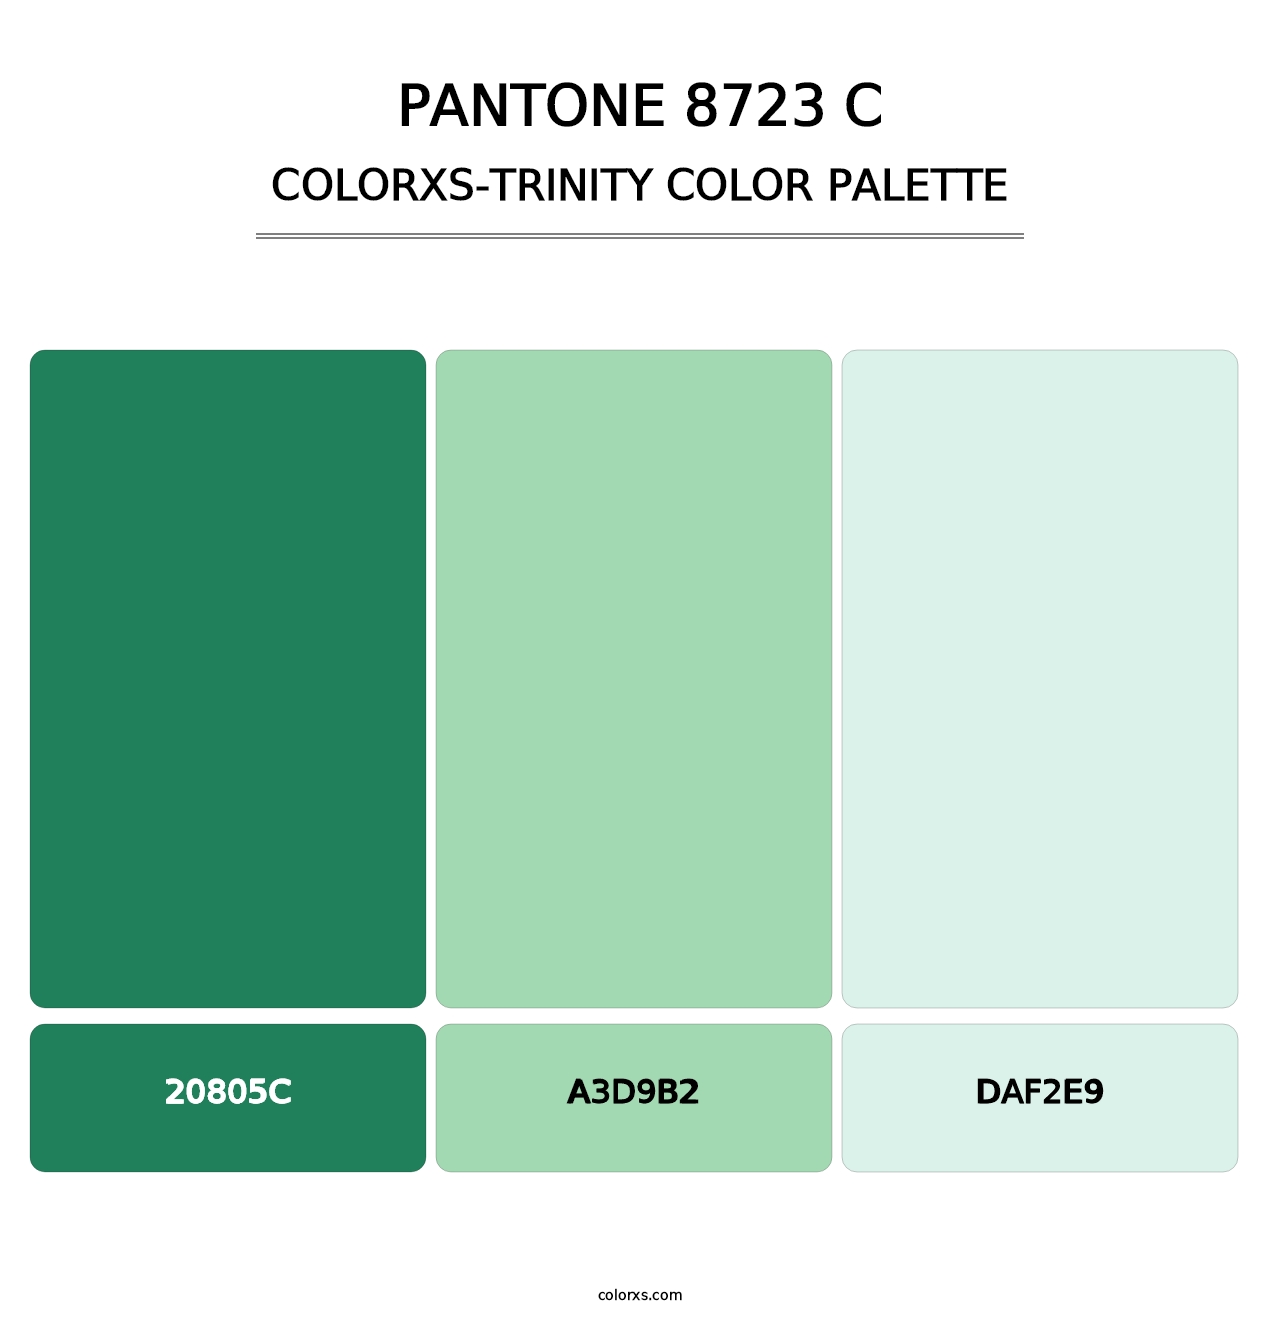 PANTONE 8723 C - Colorxs Trinity Palette